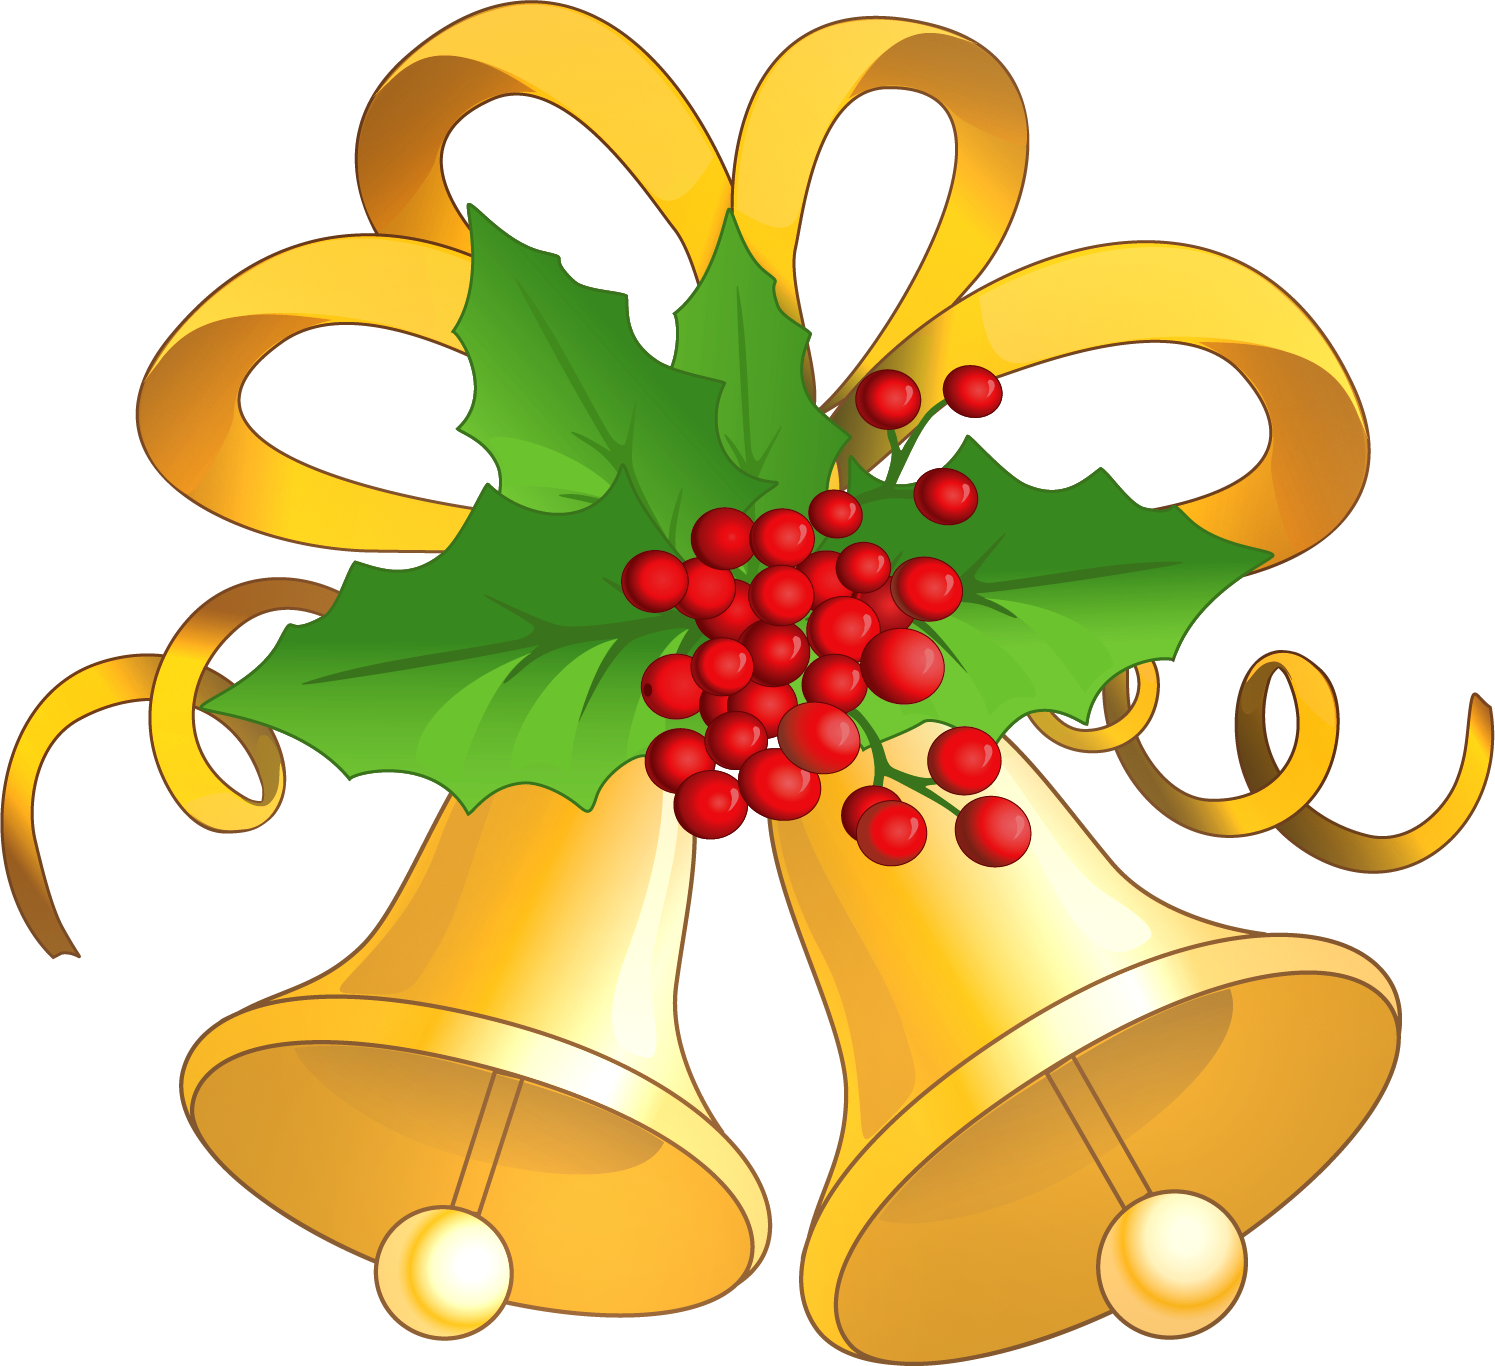 Christmas clipart christmas bells and mistletoe - ClipartFox